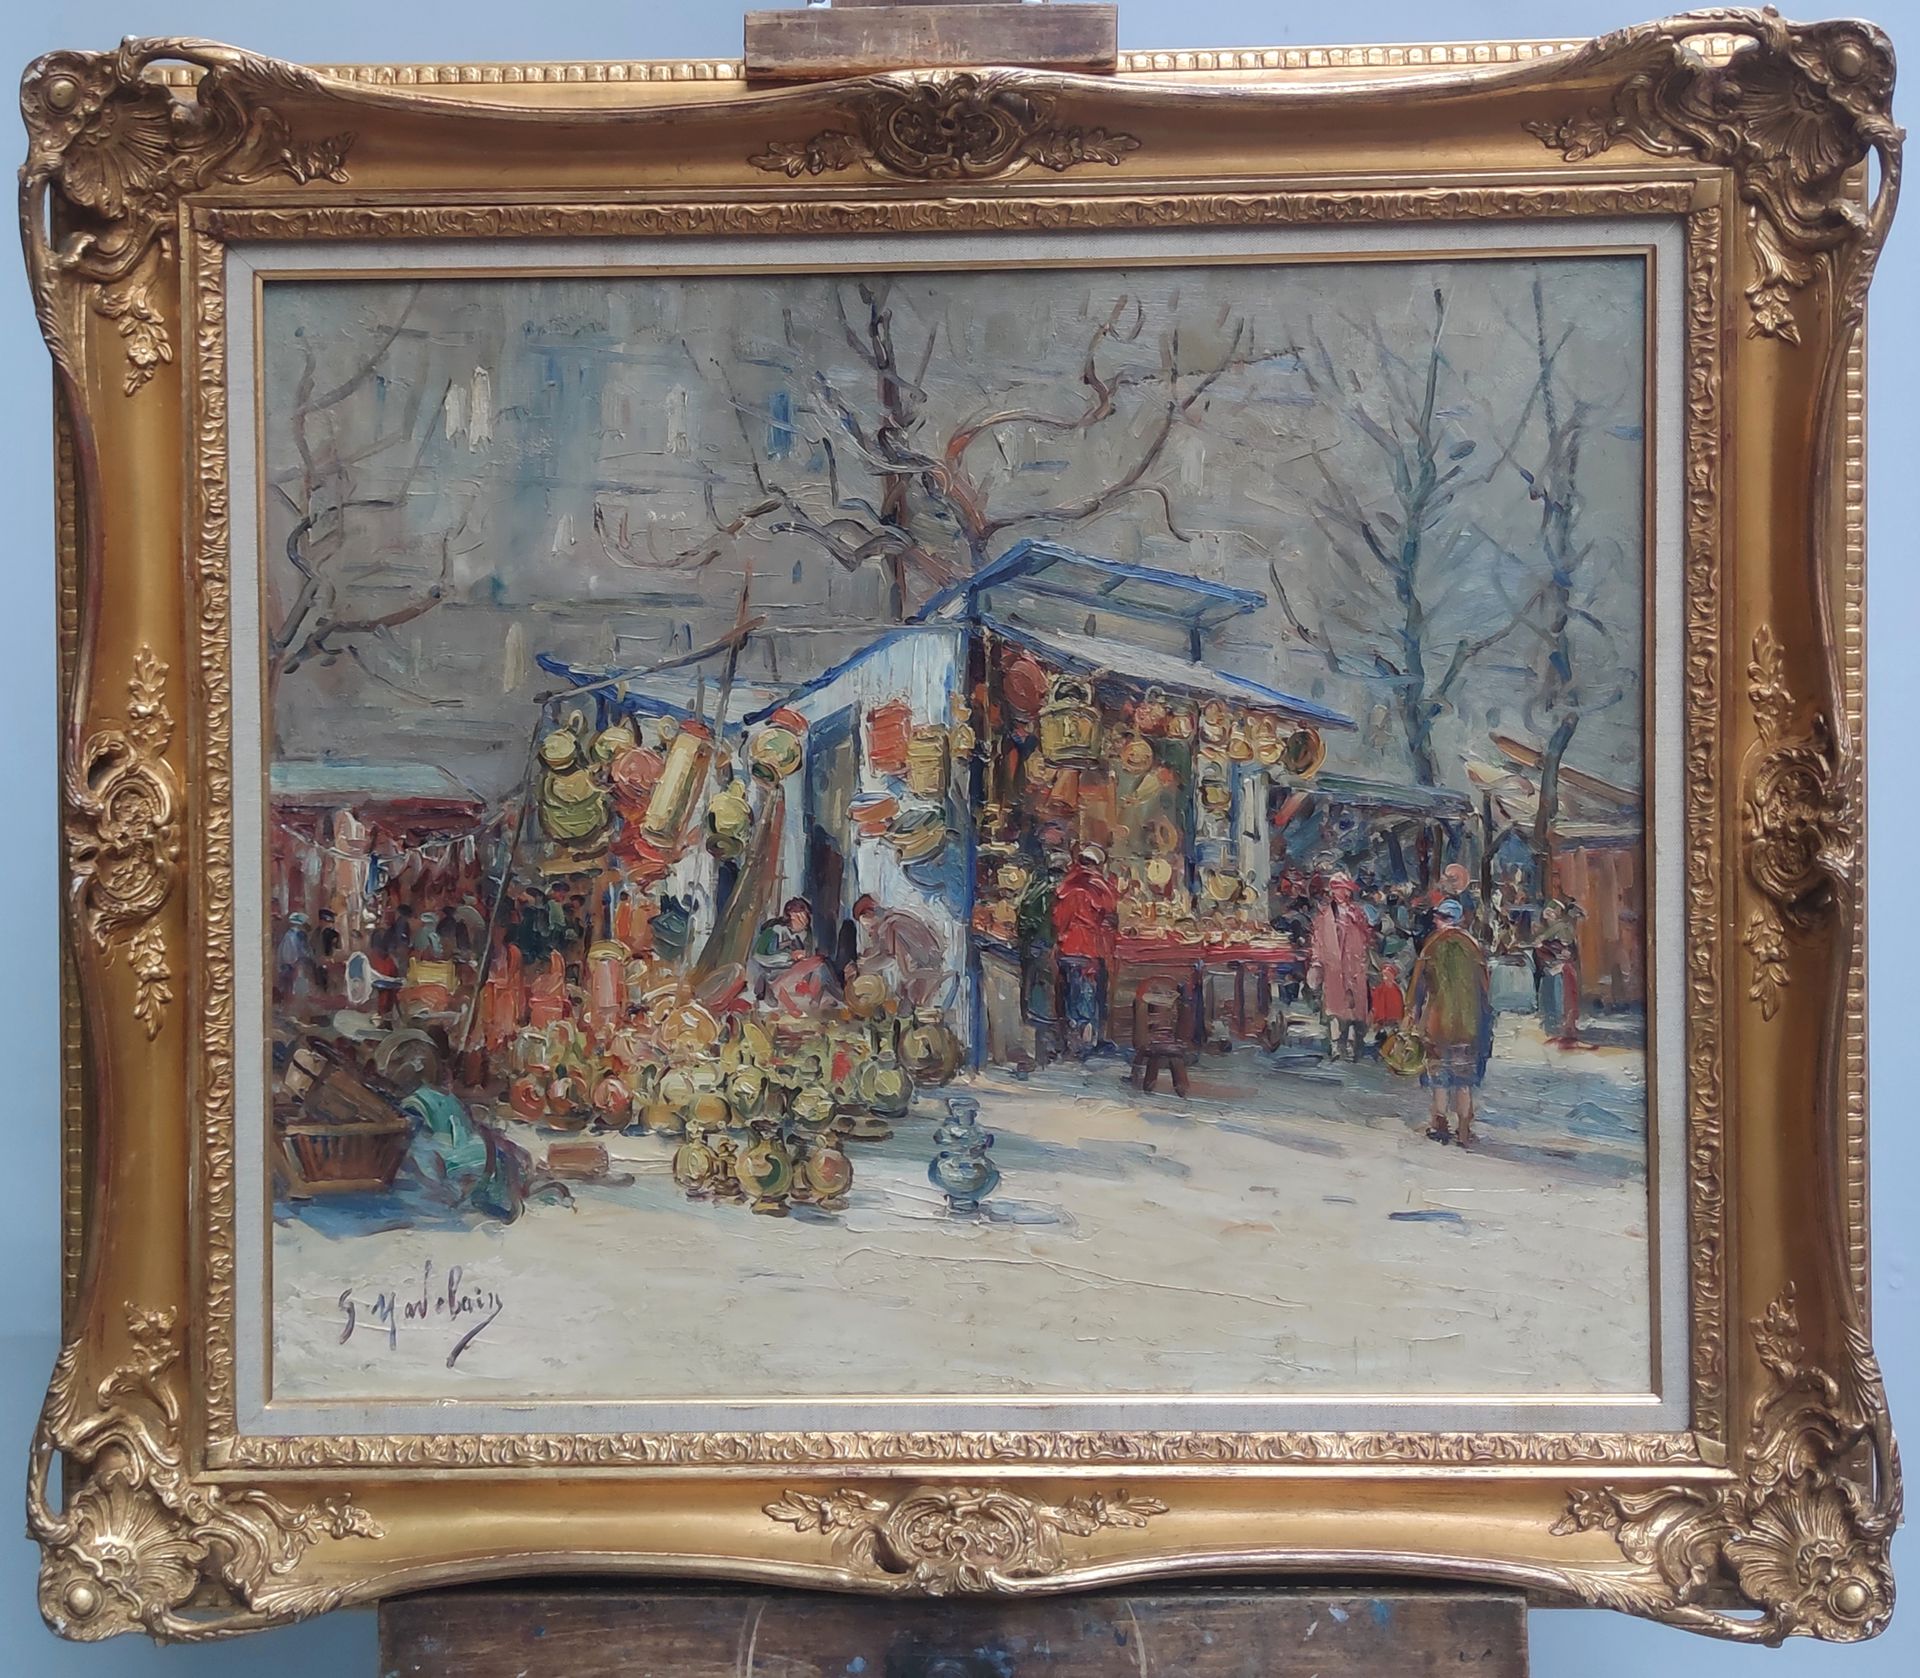 Null 
古斯塔夫-马德兰(1867-1944)

巴黎的废旧金属博览会

布面油画，左下方有签名

59 x 73 cm (与画布发生意外)